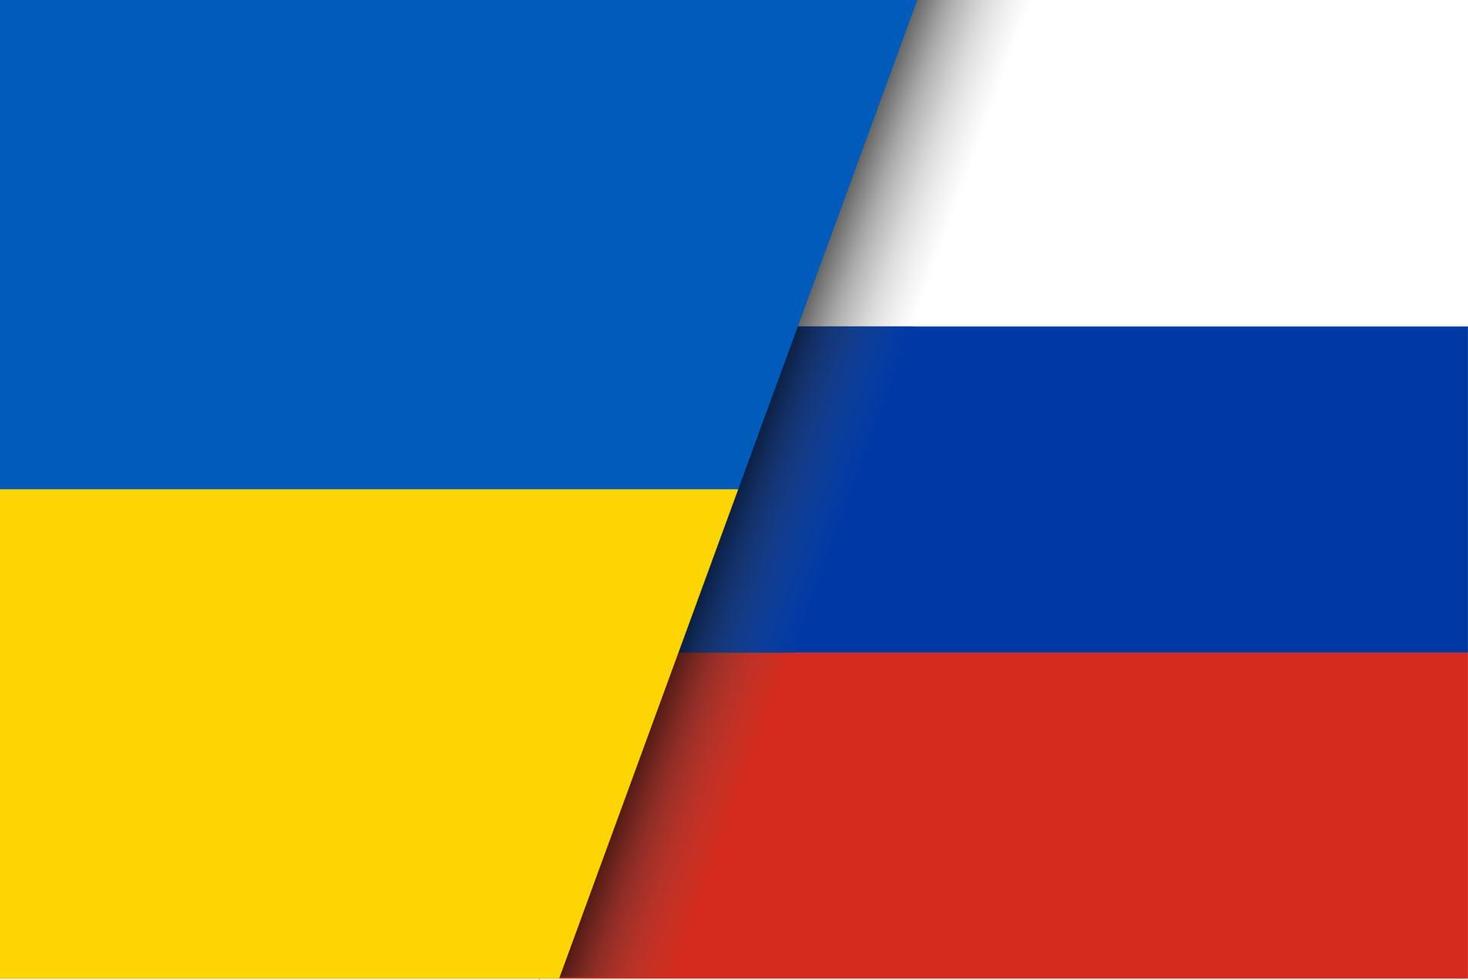 ucraina vs federazione russa guerra in europa russia attacco ucraina vettore